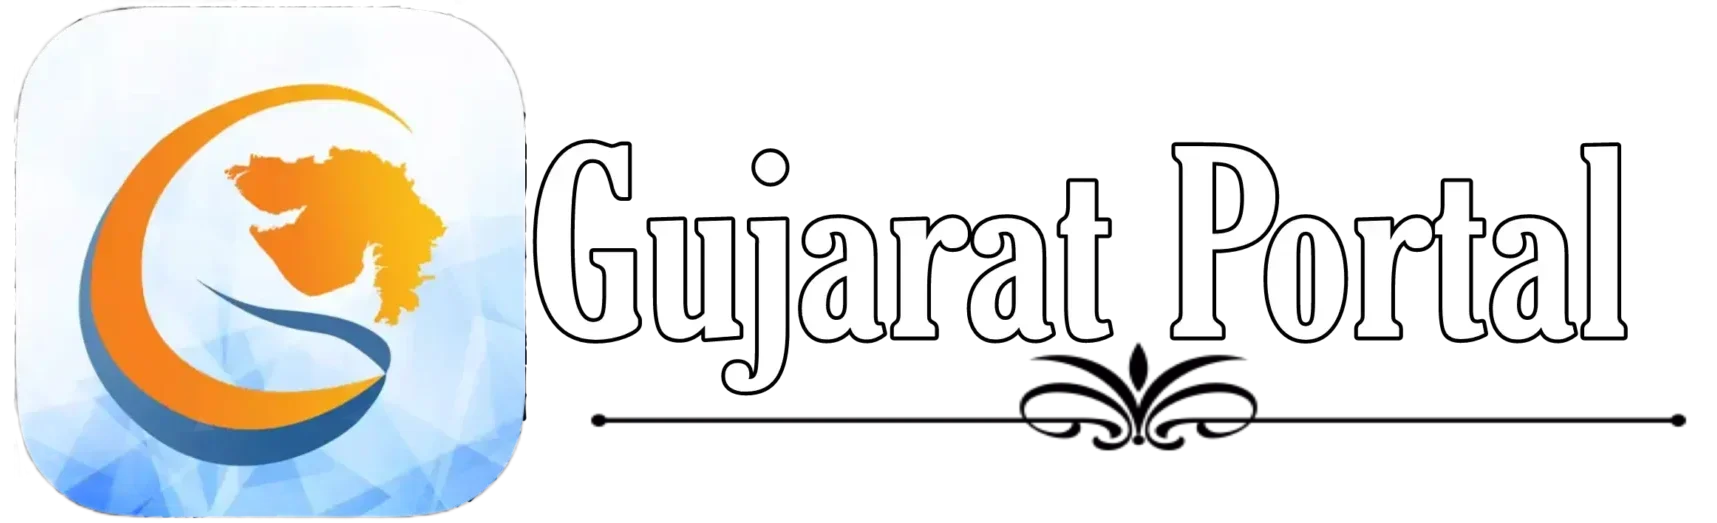 Digital Gujarat